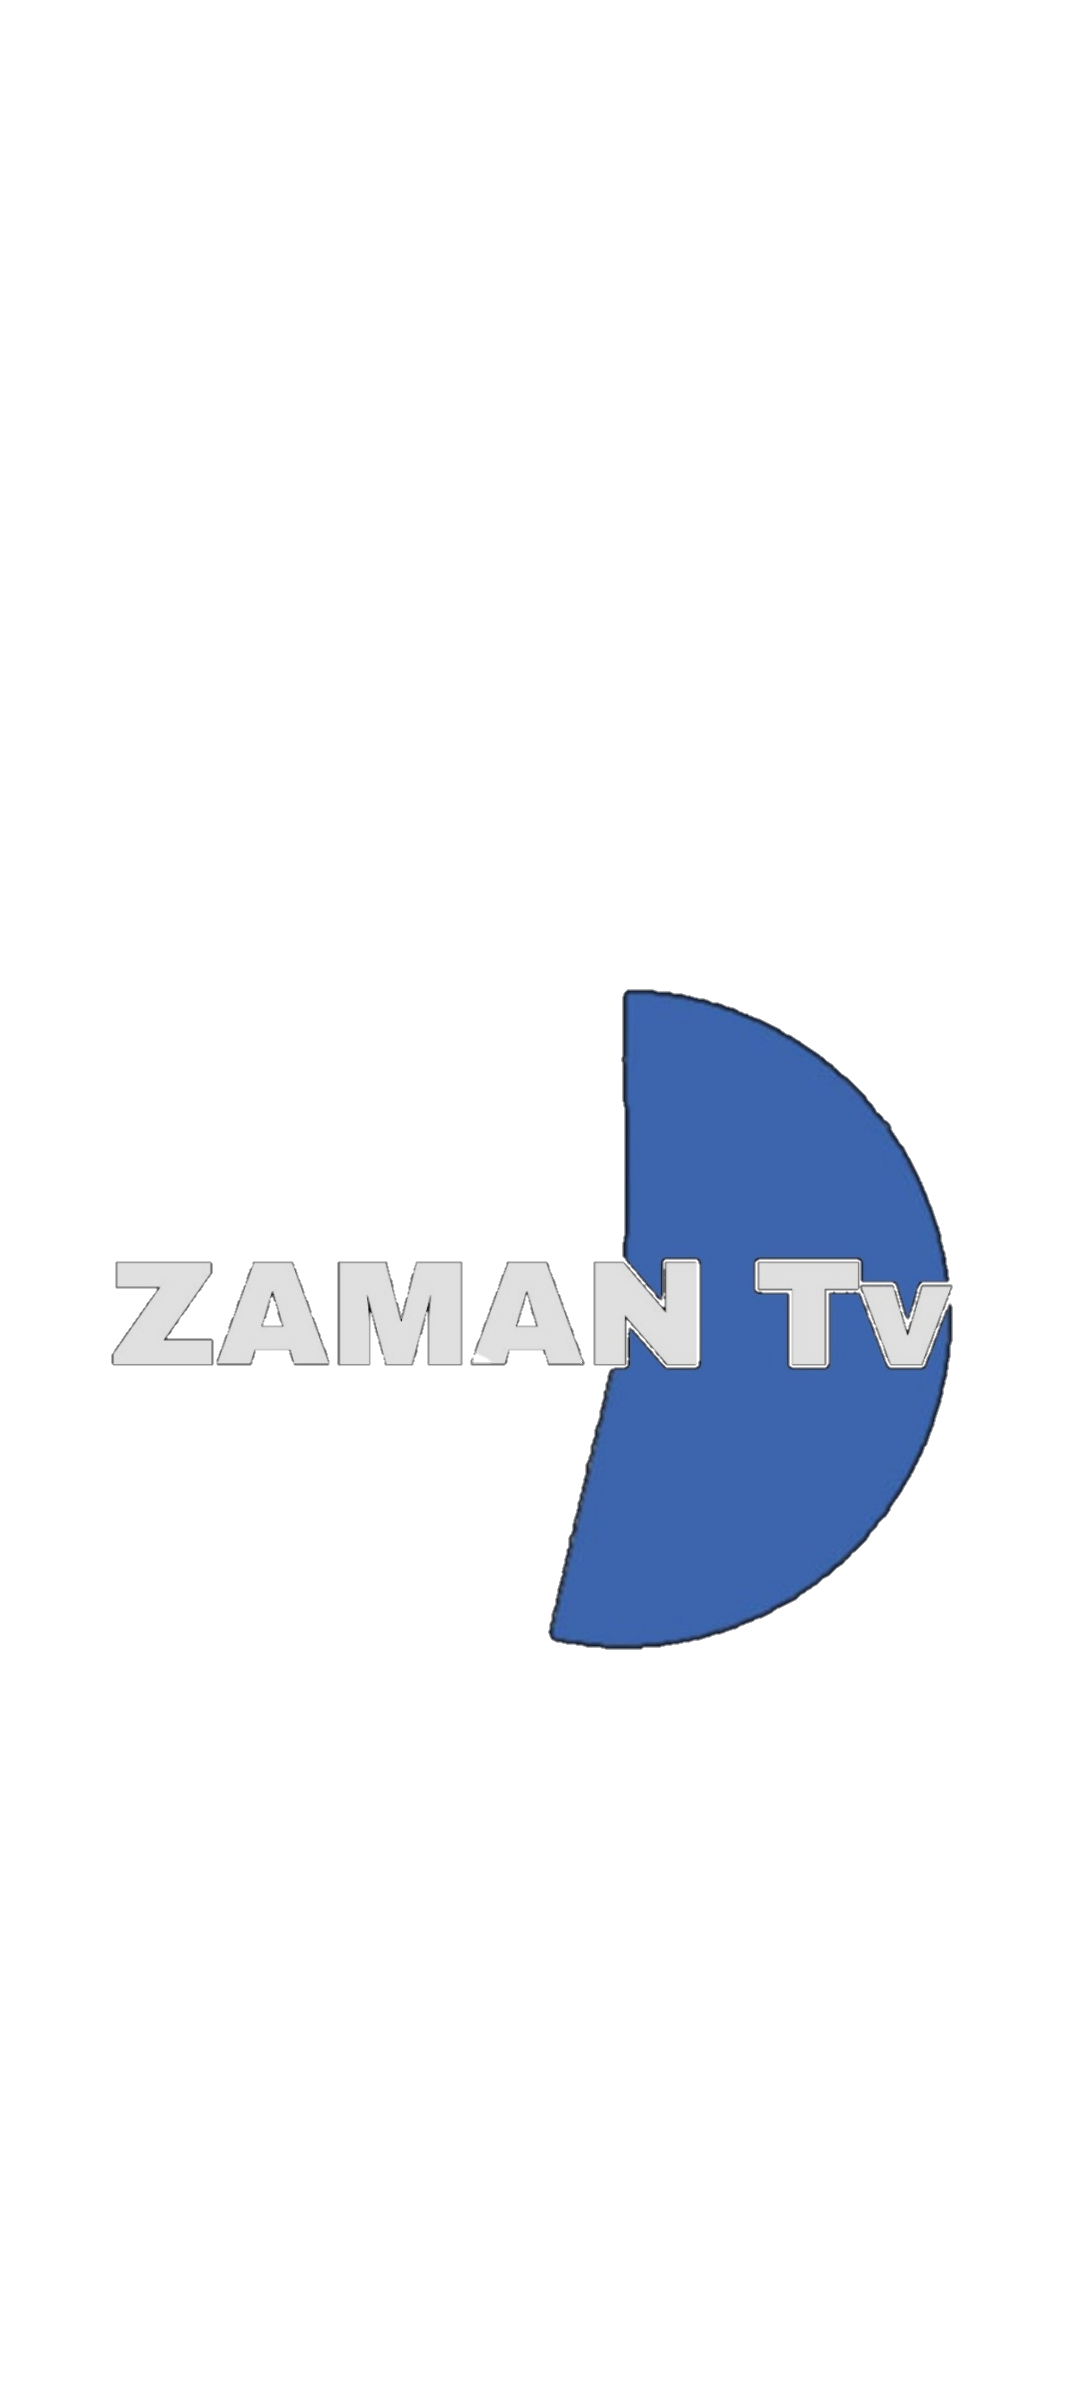 Zaman tv